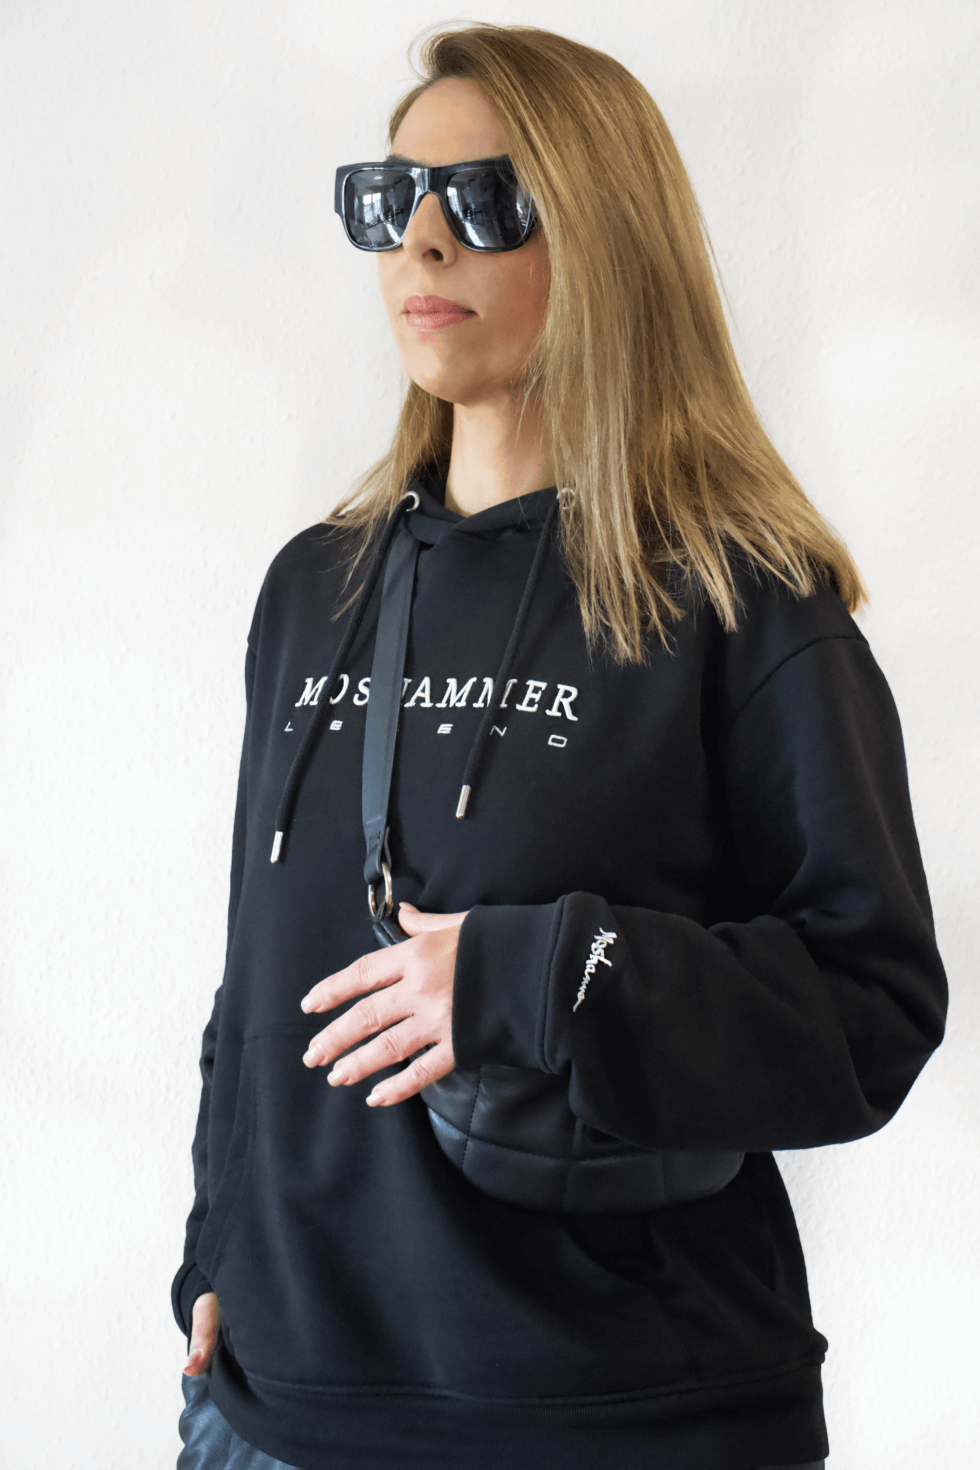 moshammer-hoodie-woman-black